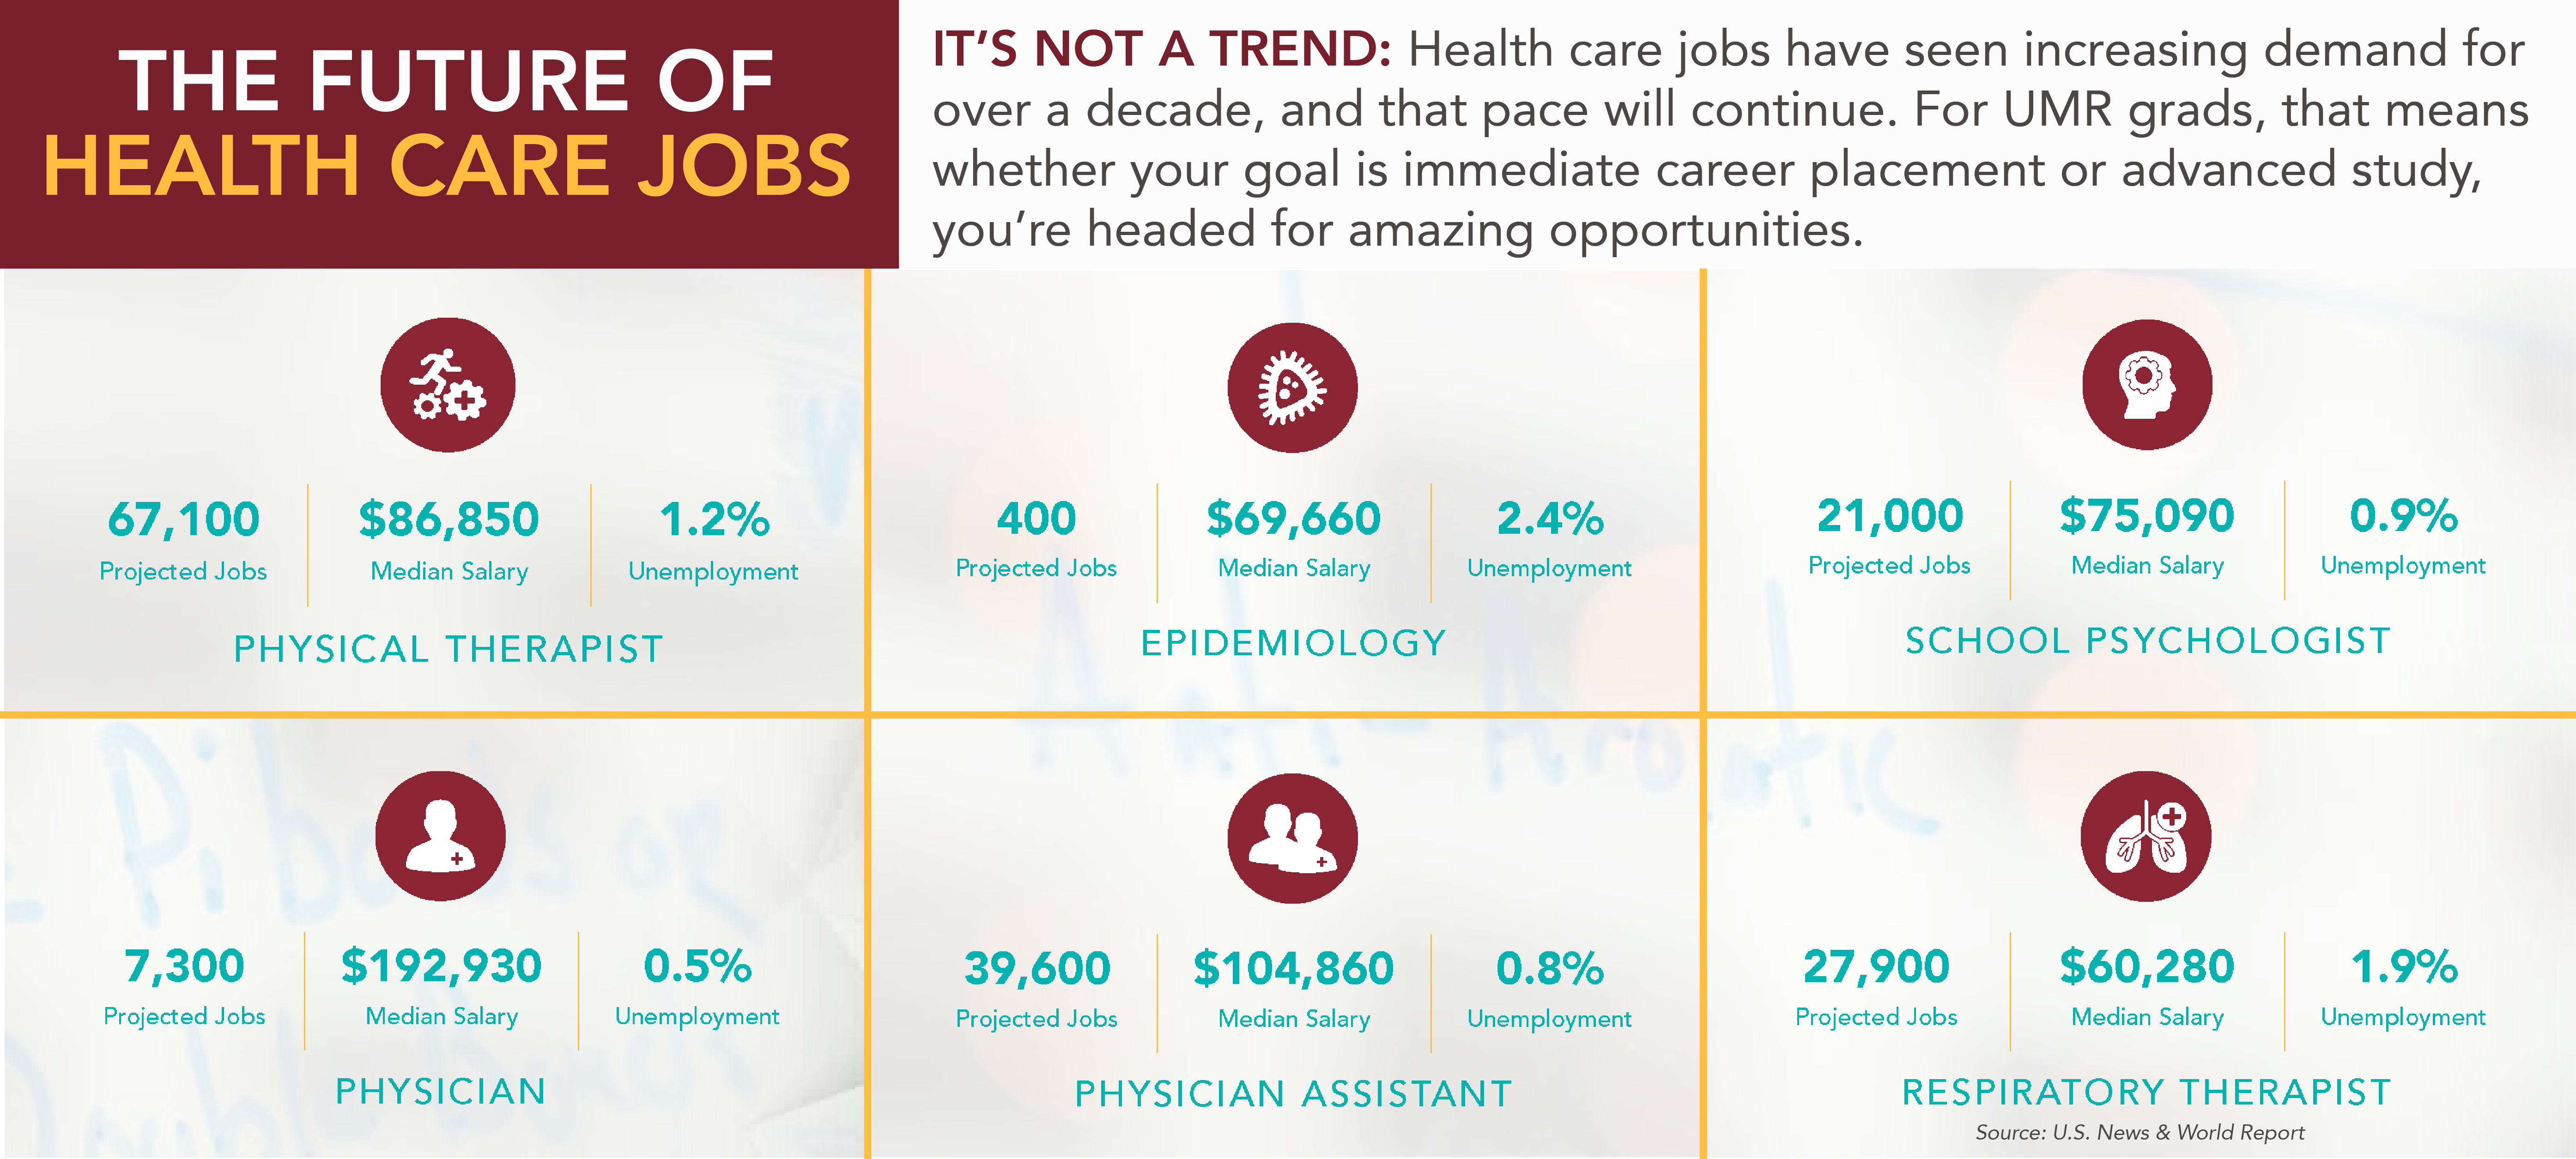 The Future of Health Care Jobs